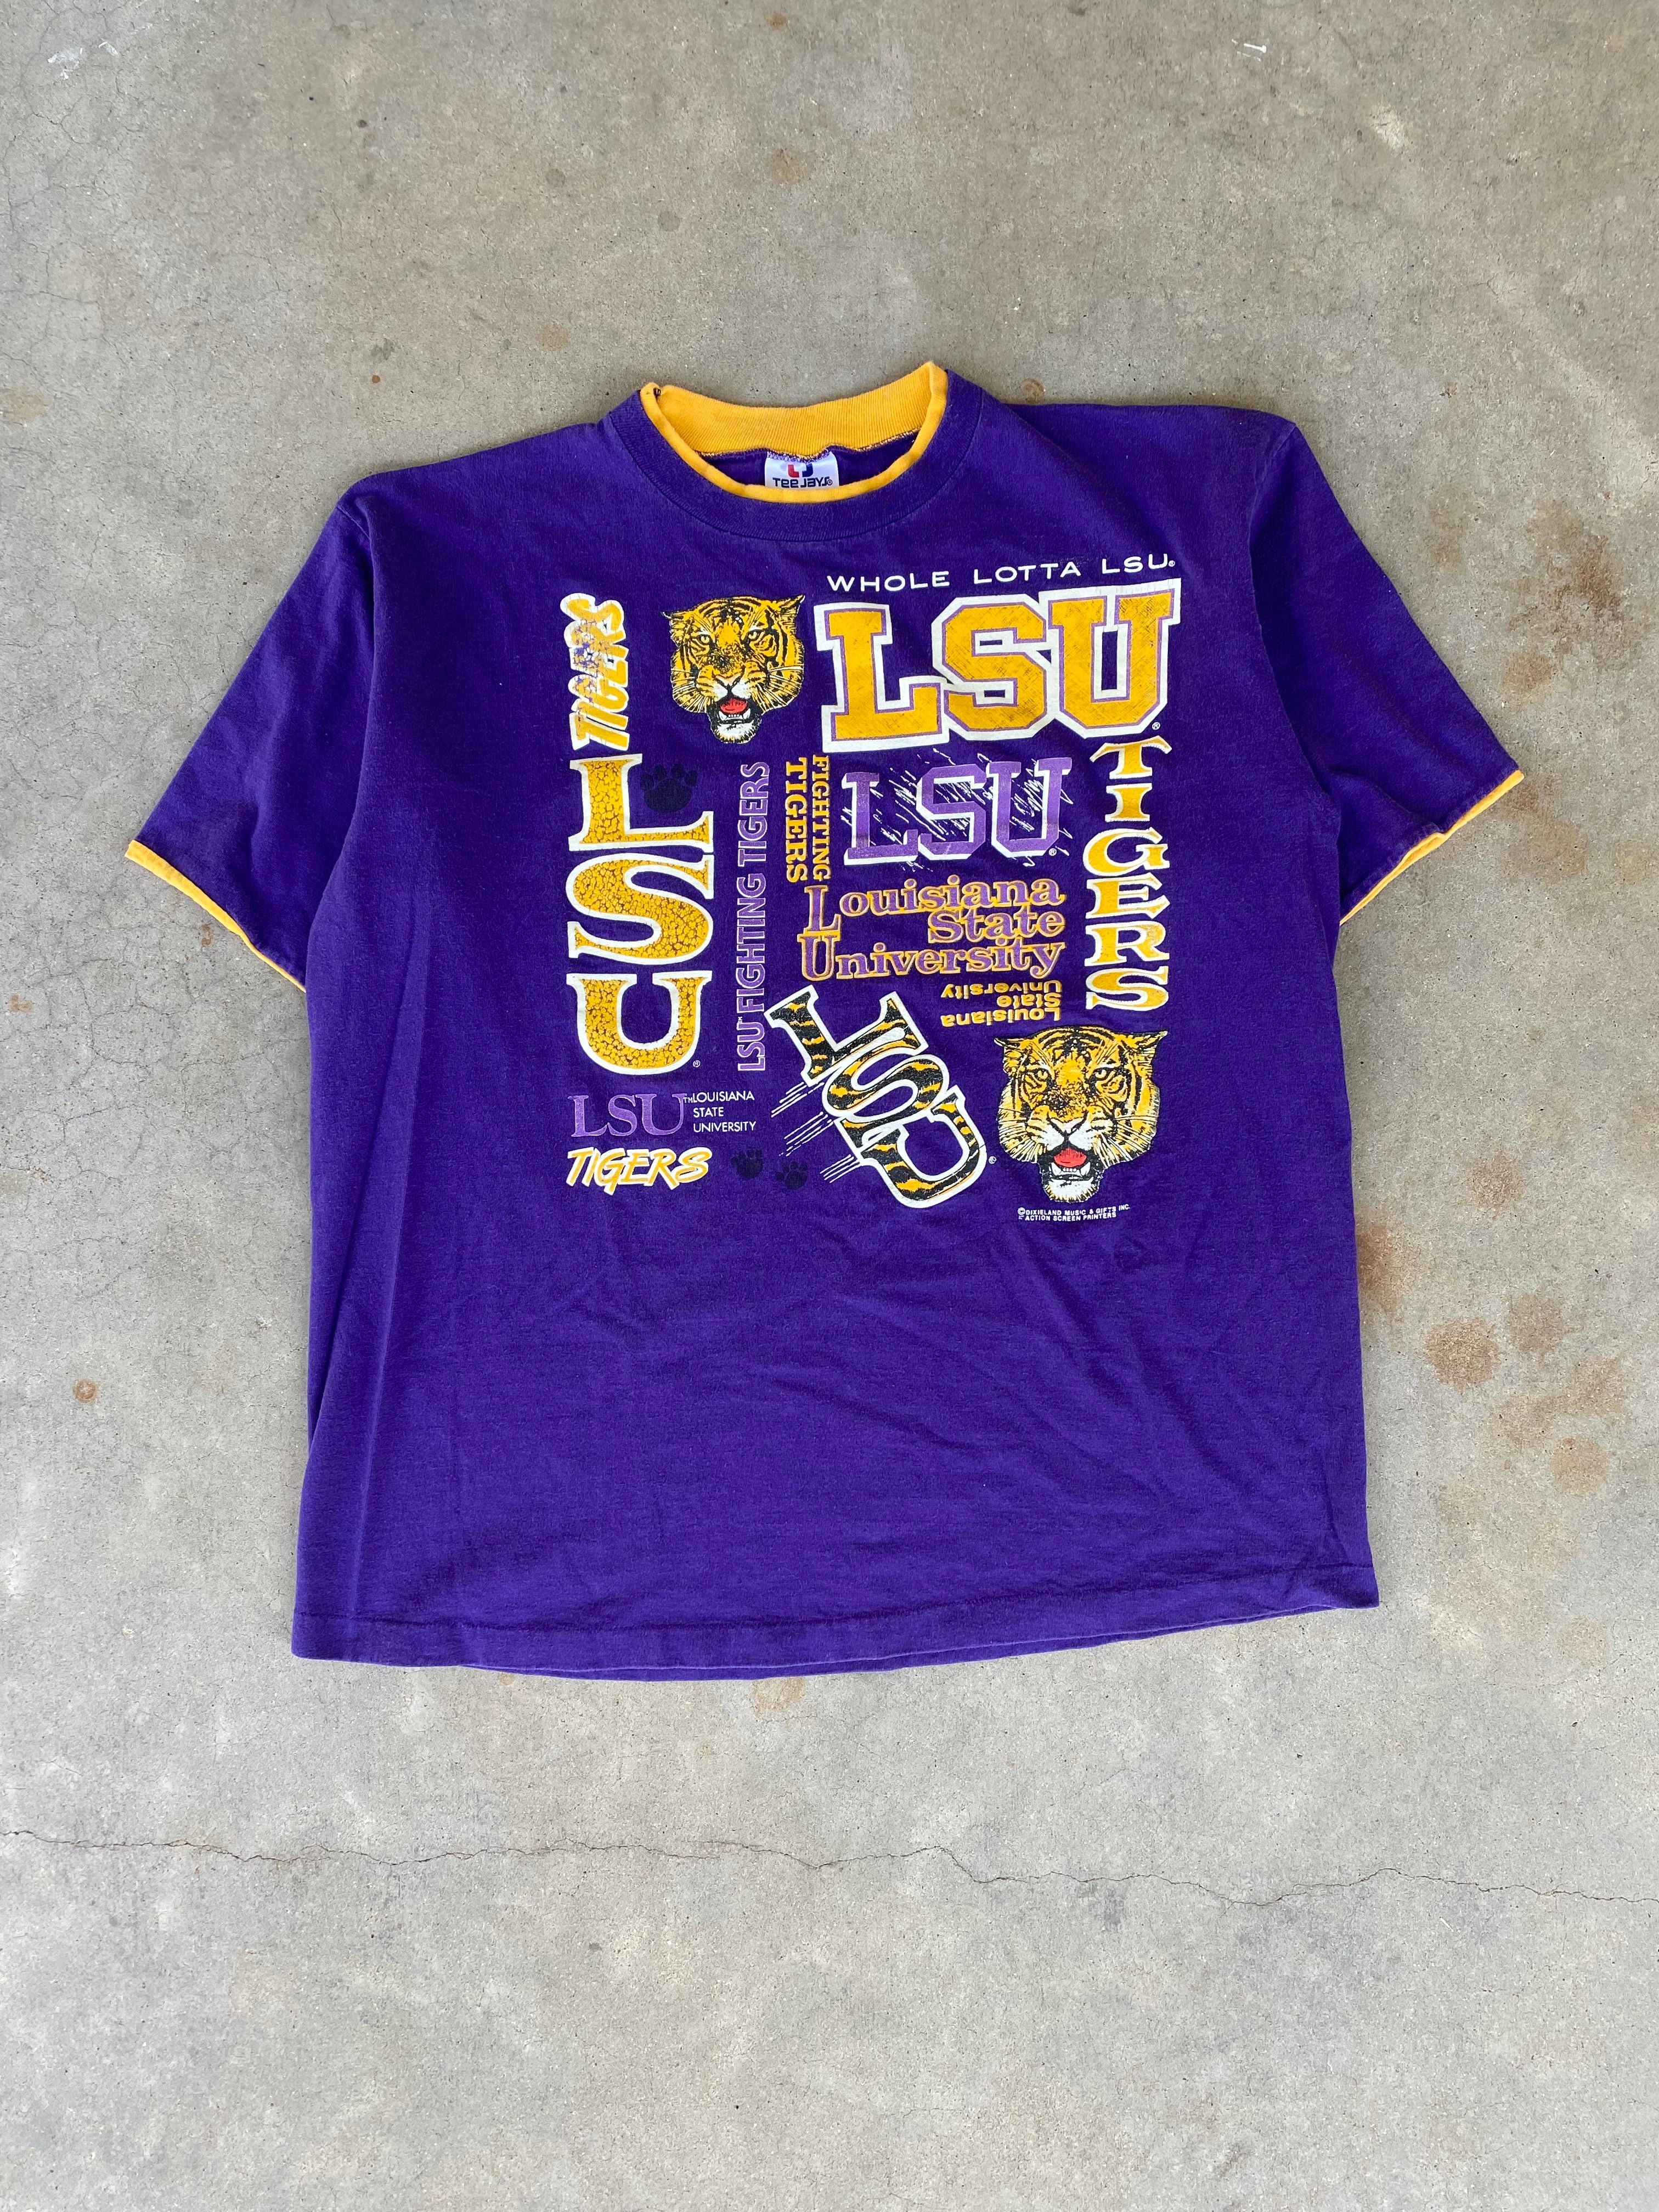 1990s LSU "Whole Lotta LSU" T-Shirt (XL)